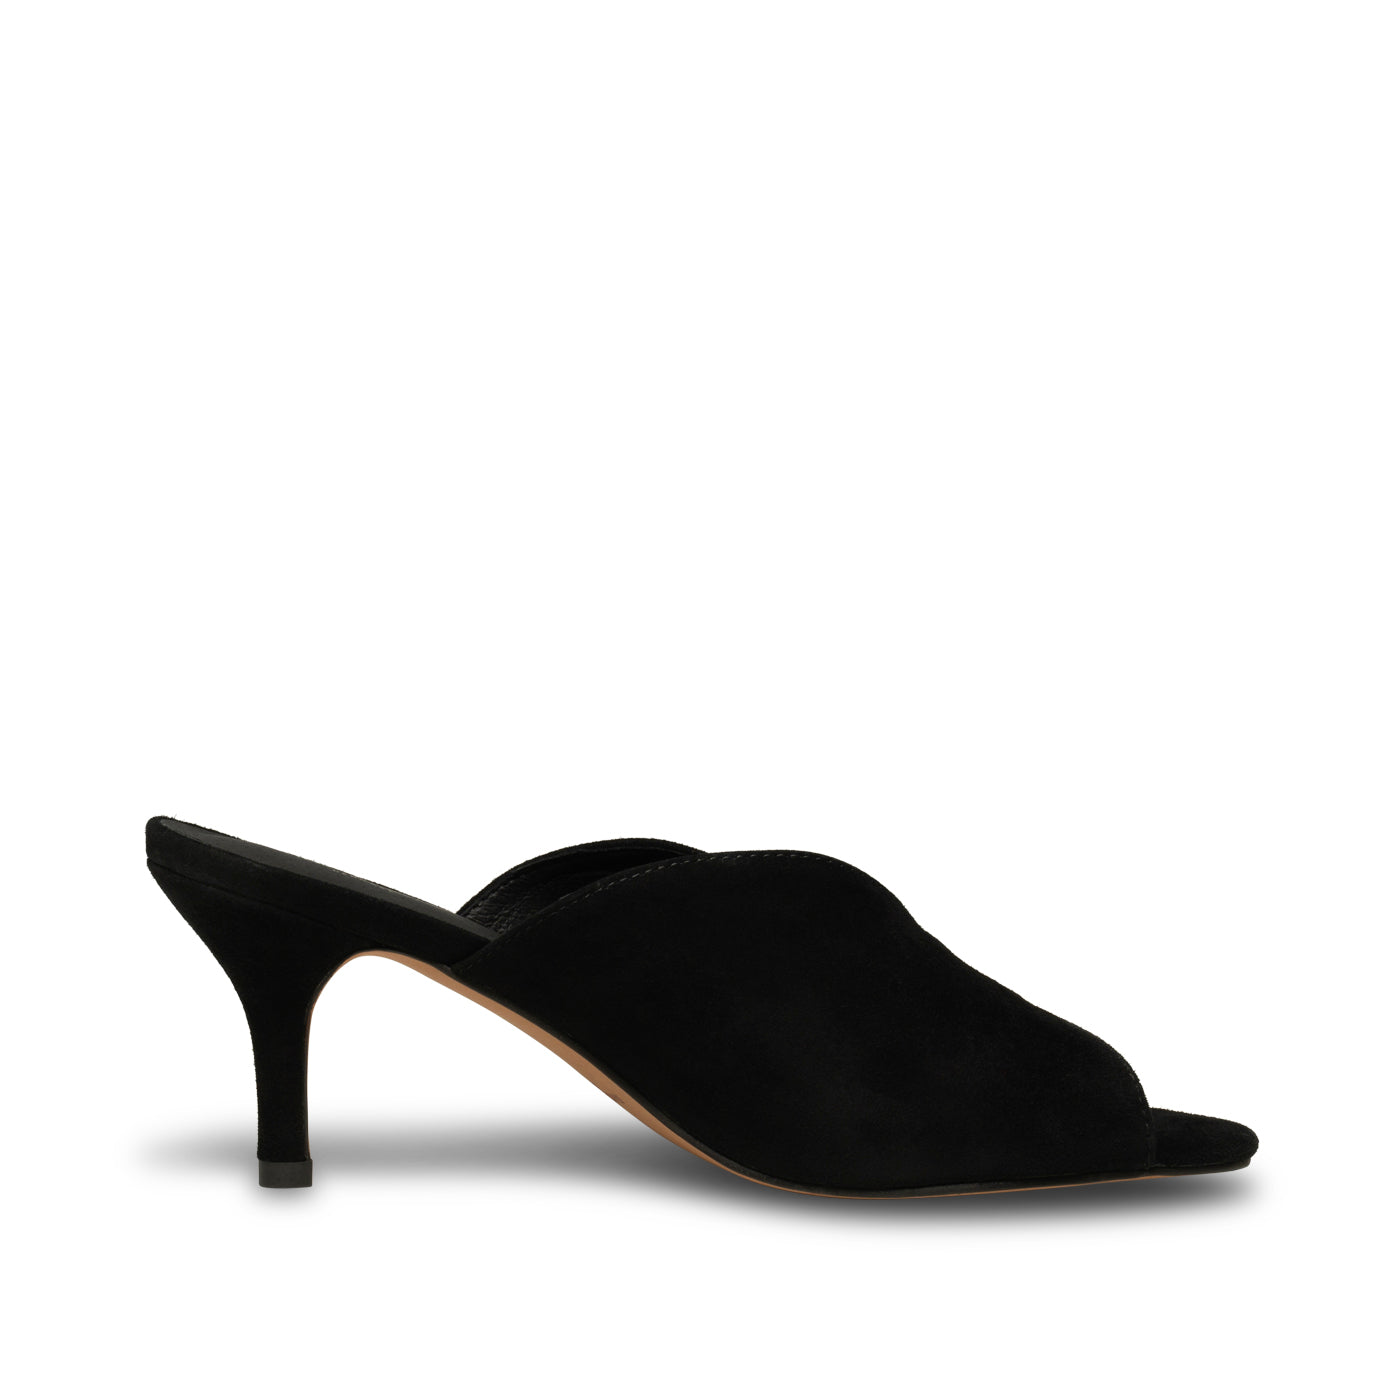 SHOE THE BEAR WOMENS Valentine sandal suede Heel Sandals 110 BLACK